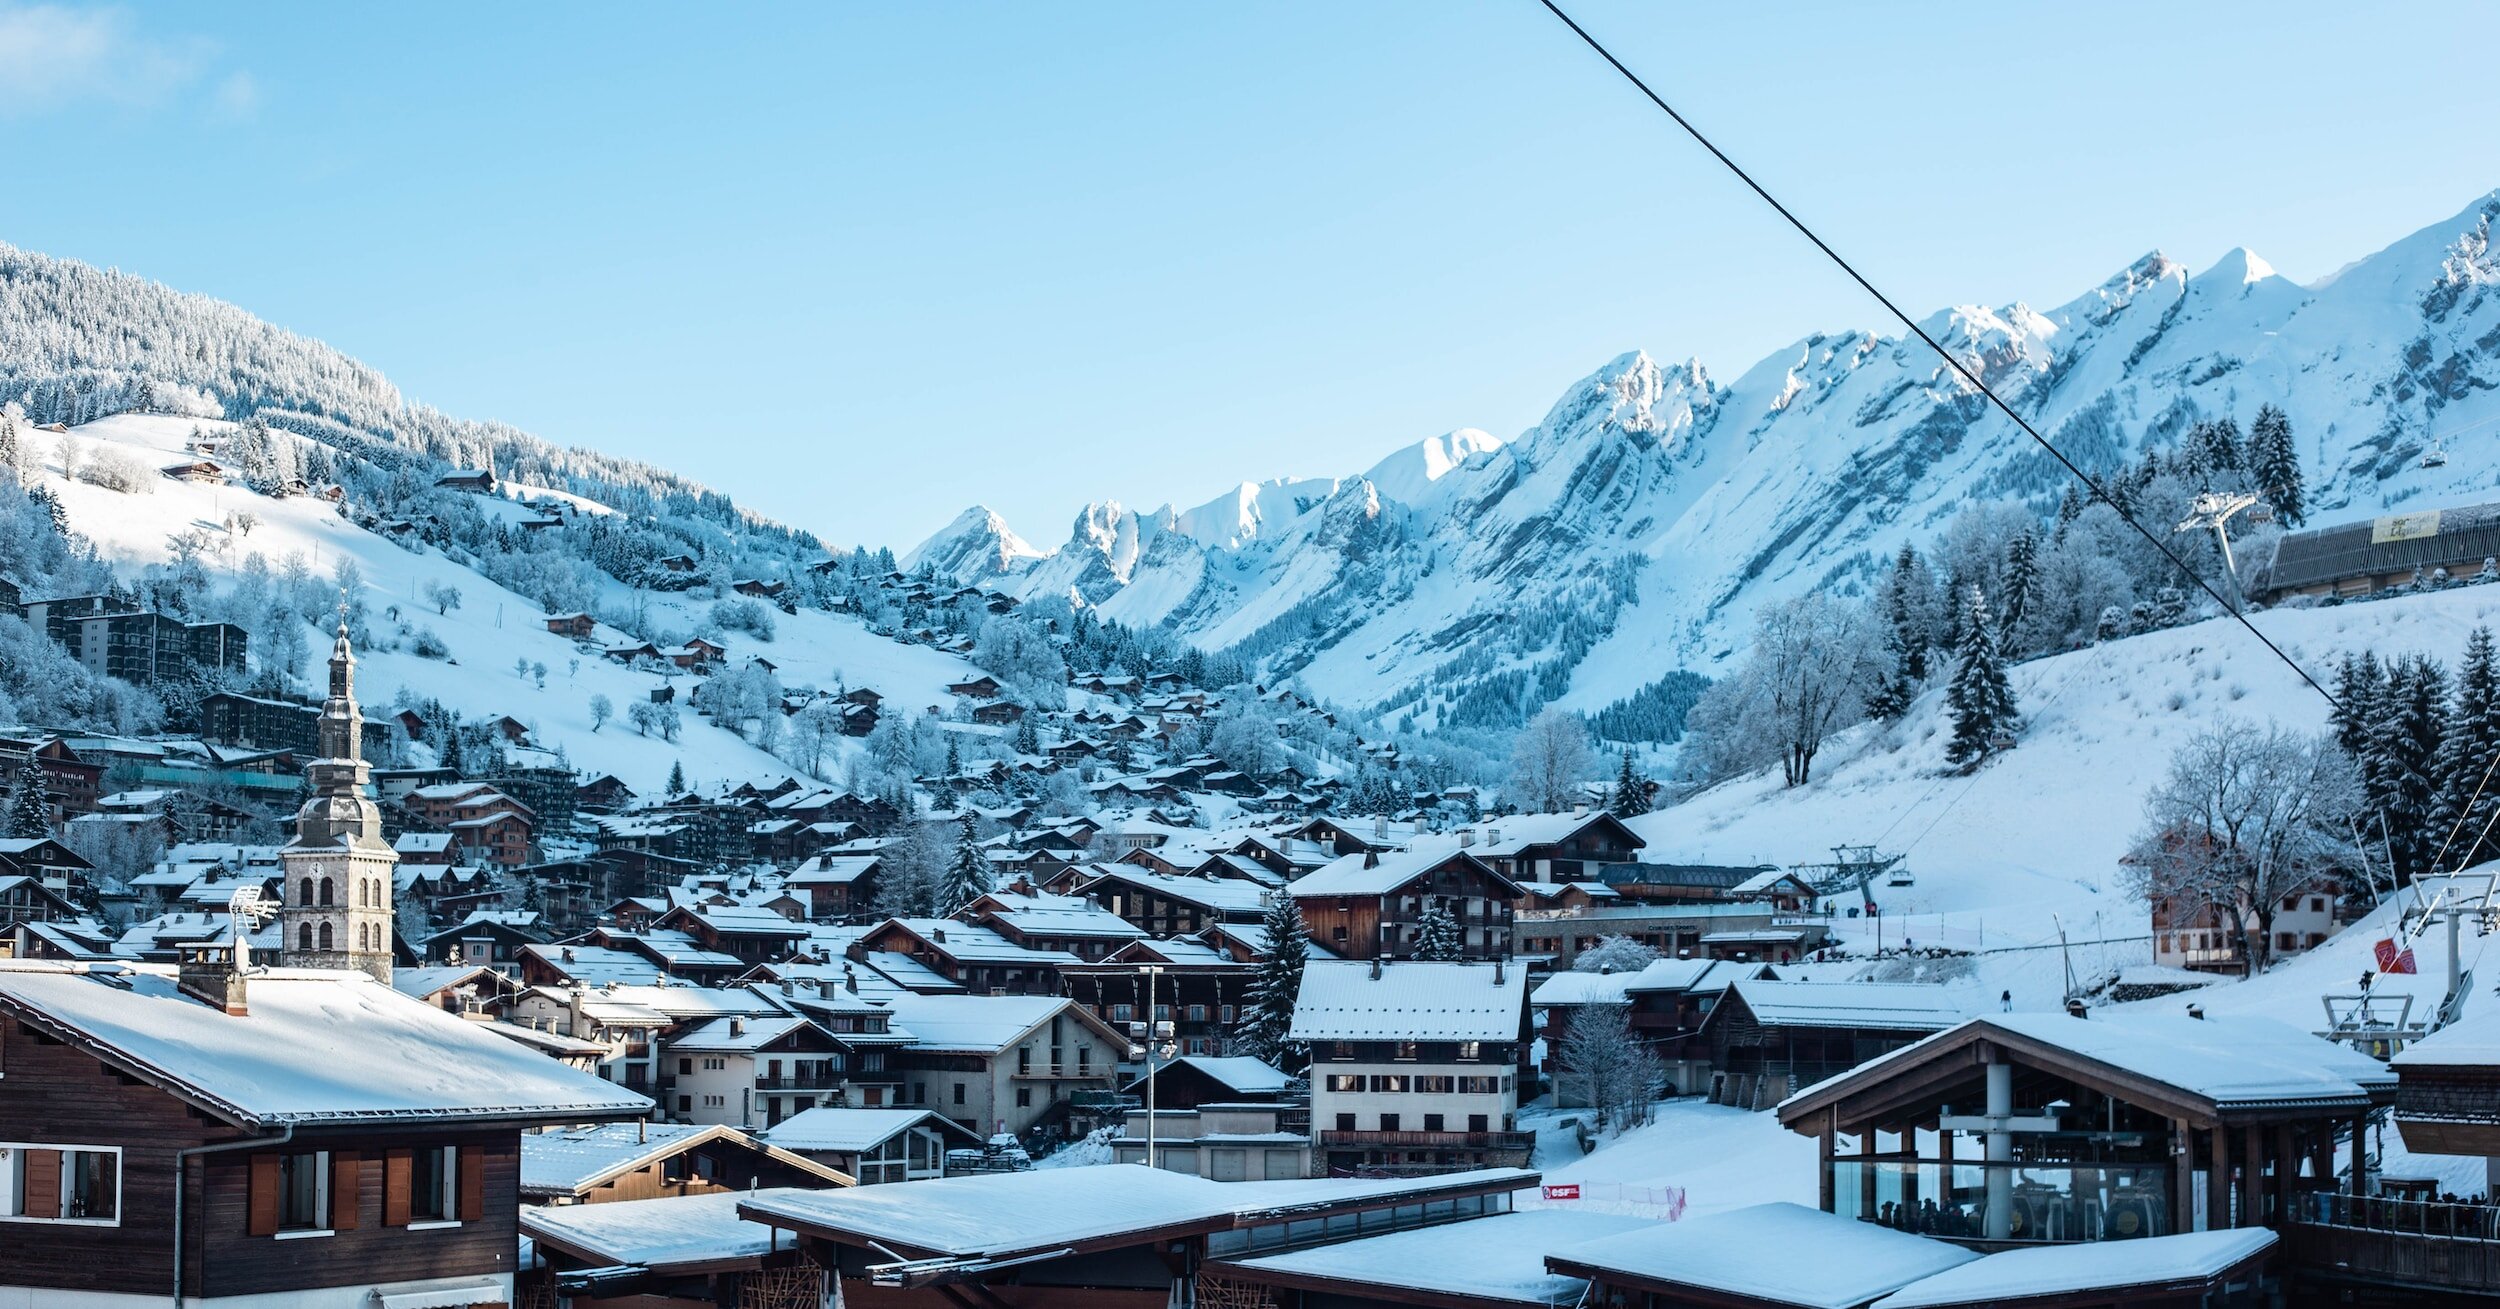 Discover La Clusaz in the heart of the Alps